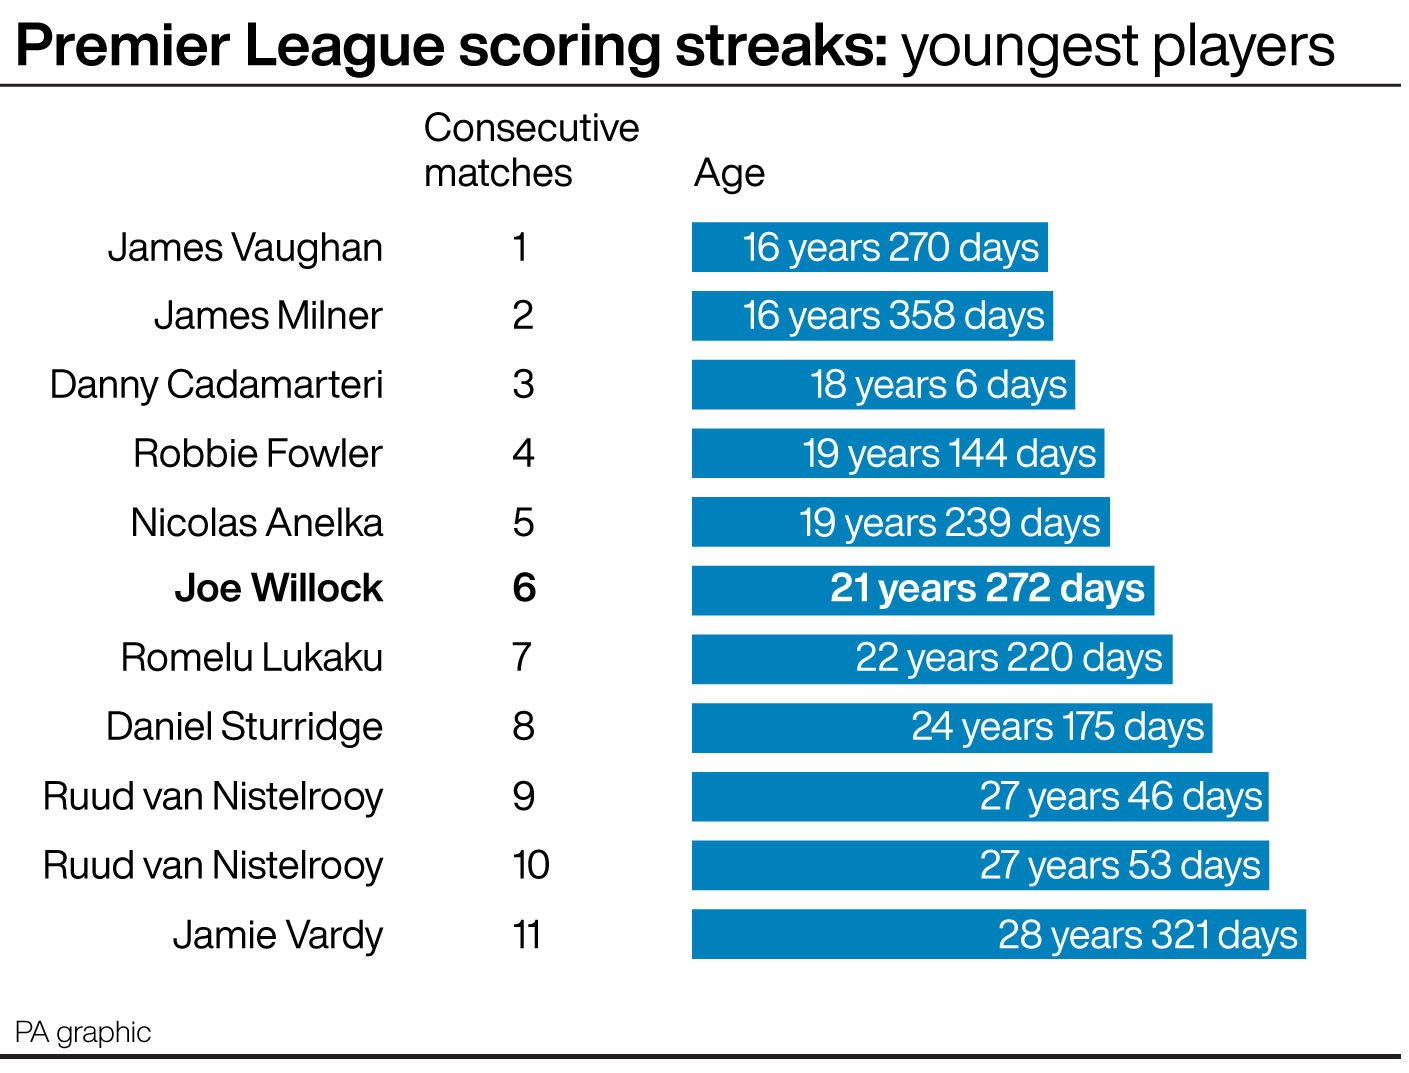 Premier League scoring streaks - youngest players